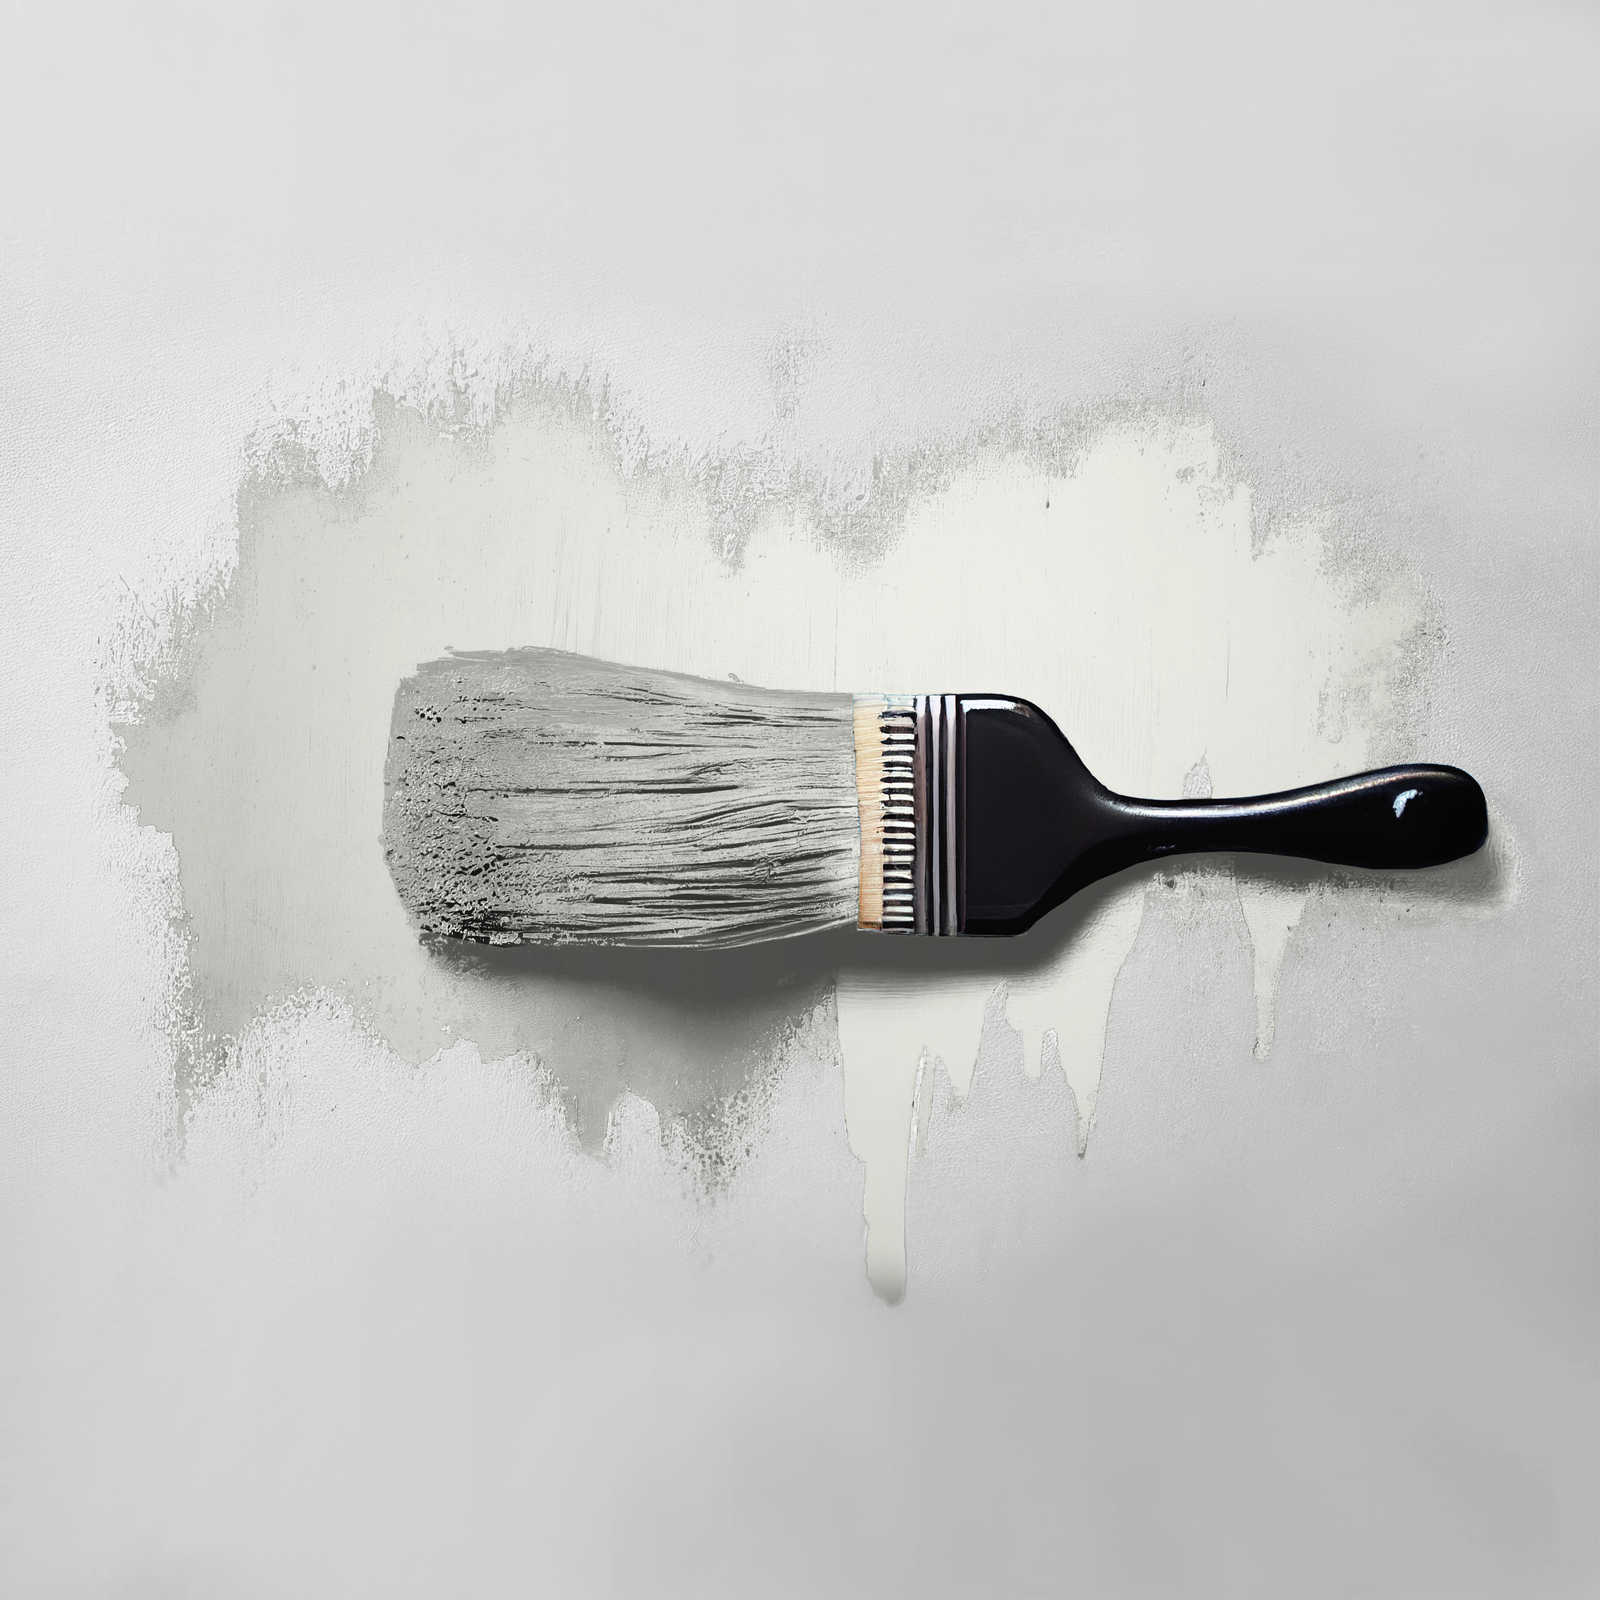             Wall Paint TCK1008 »Shady Sugar« in warm white – 5.0 litre
        